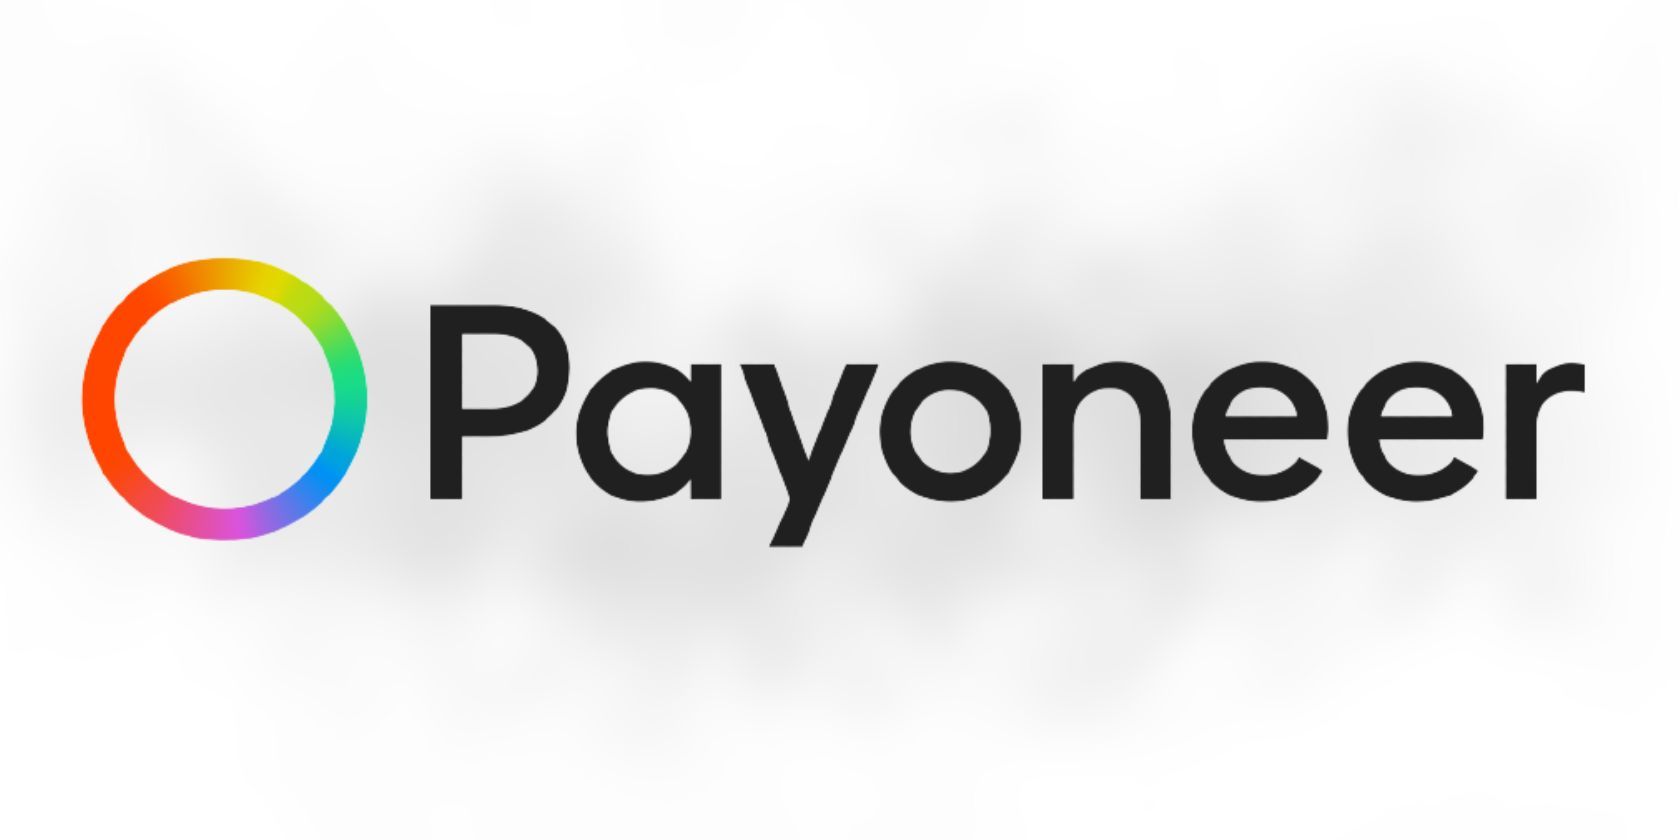 Payoneer logo on white background 